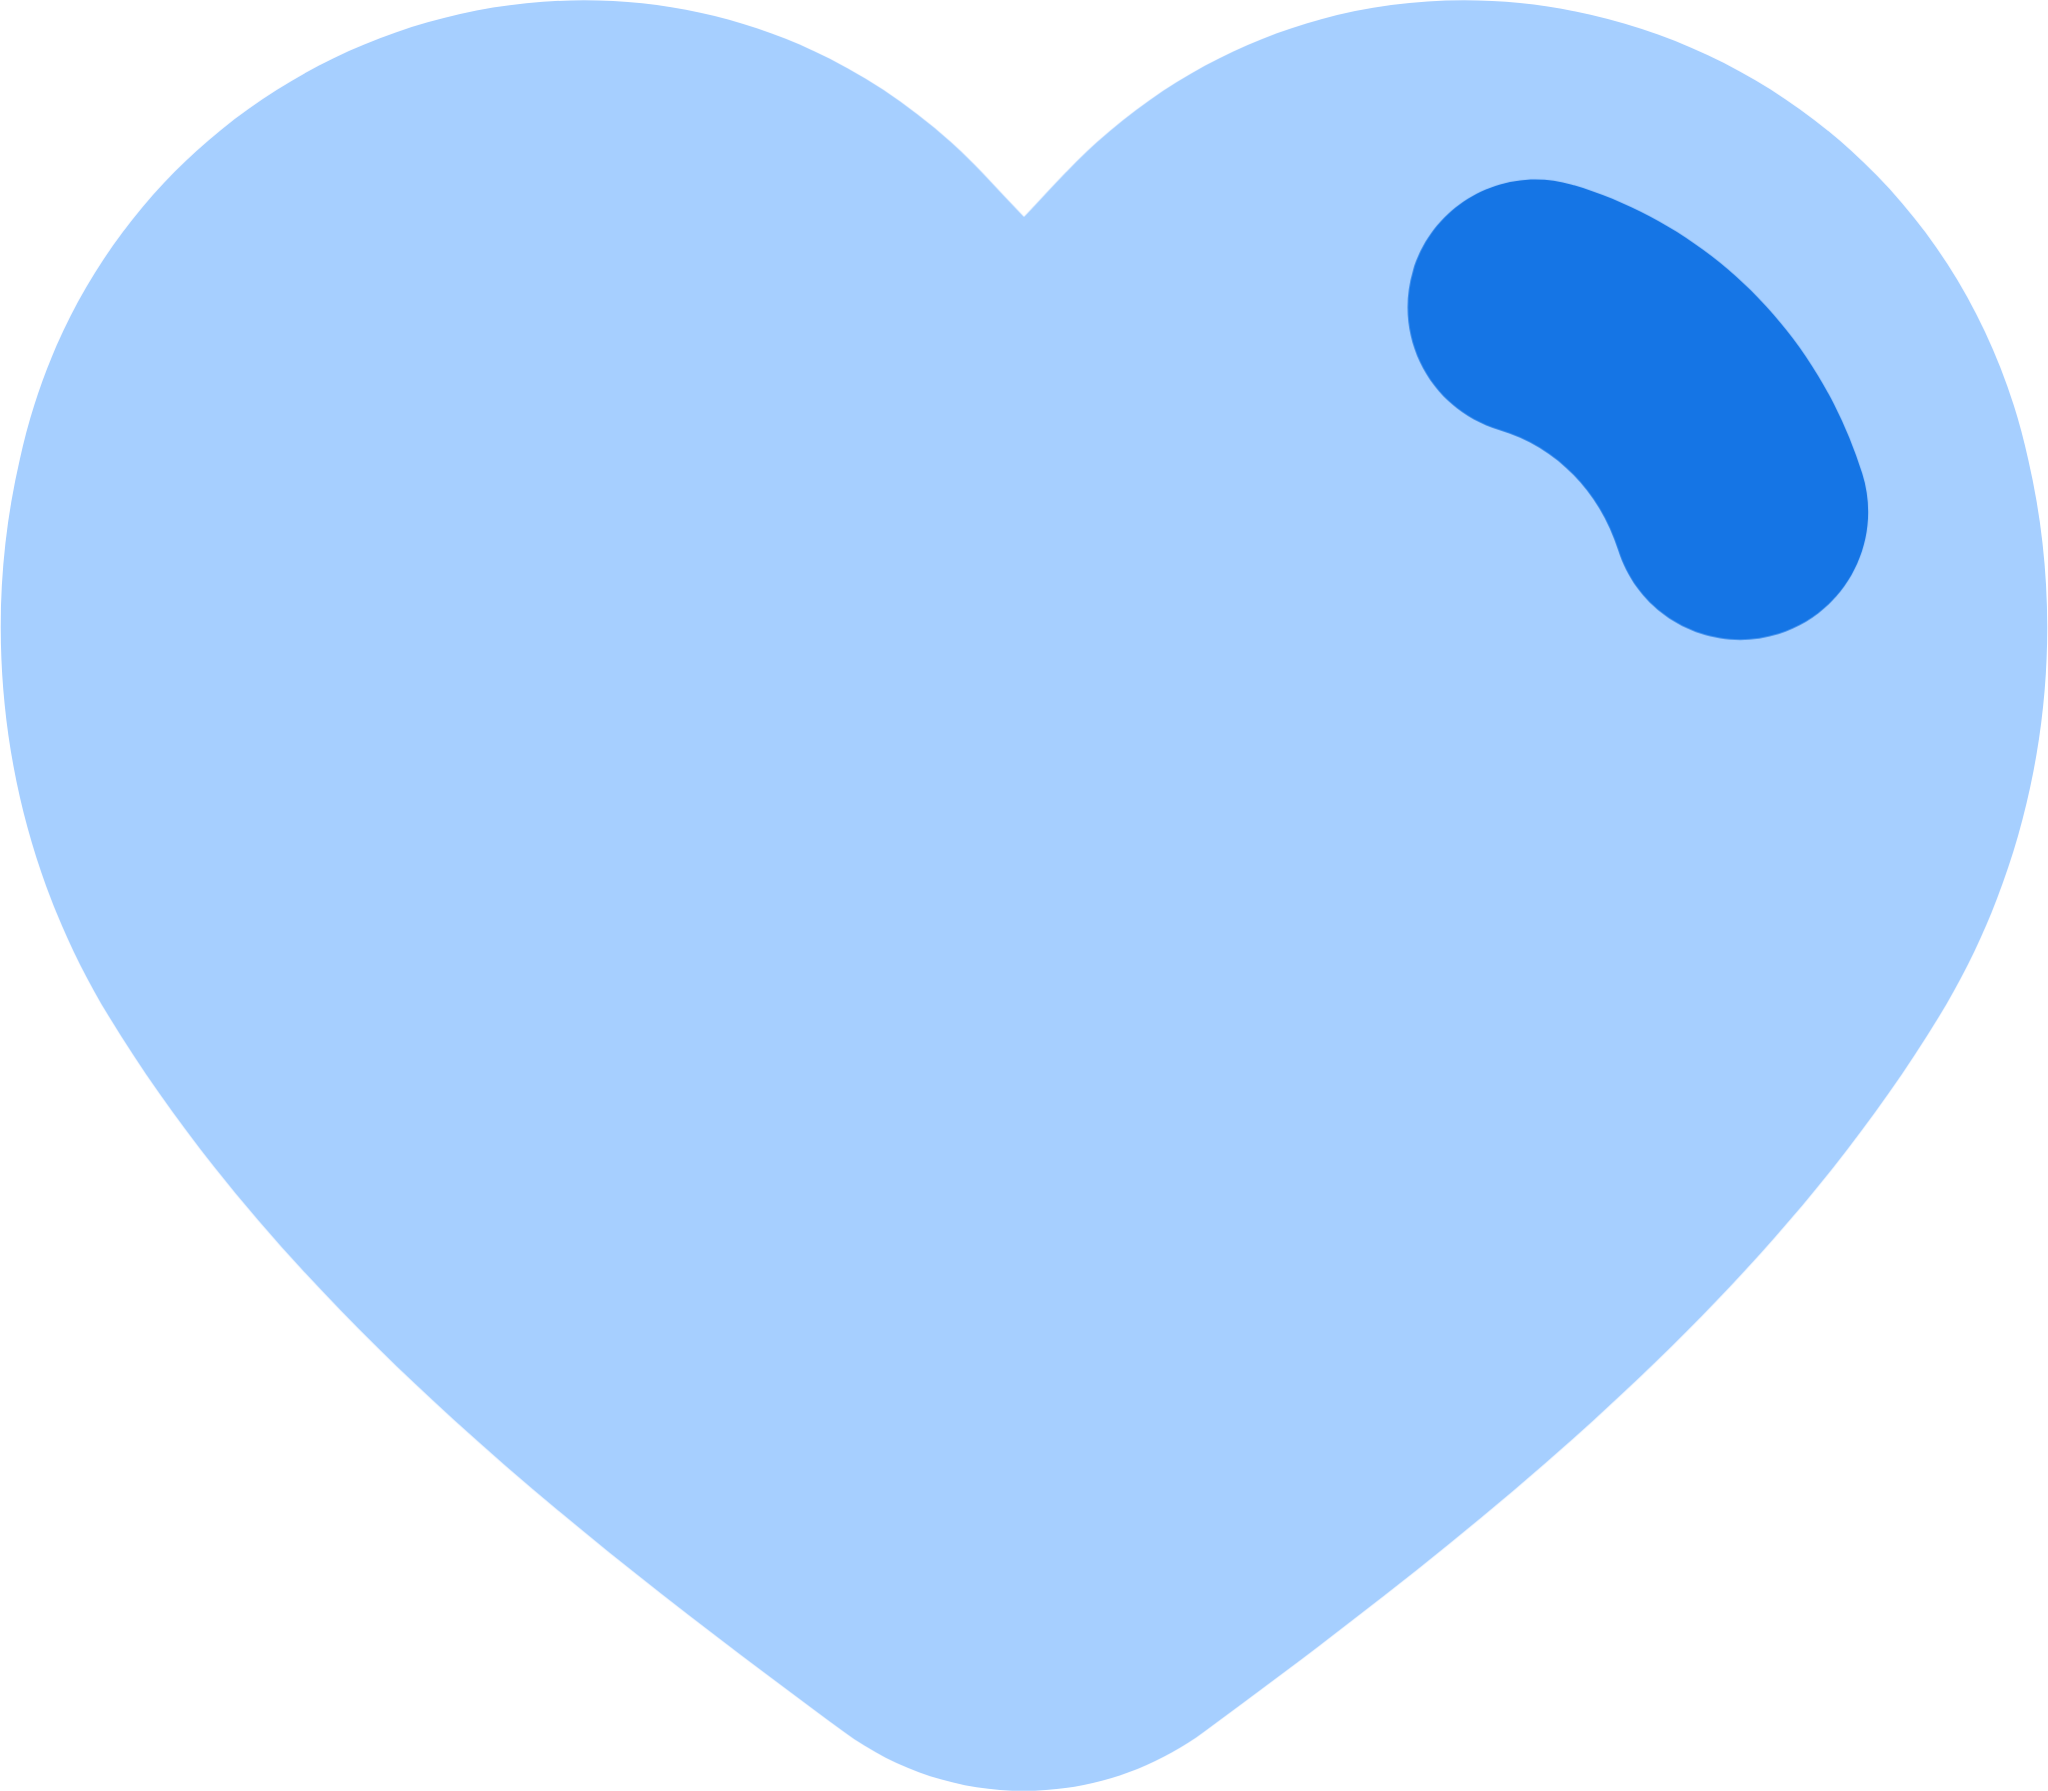 favorite heart 2 icon